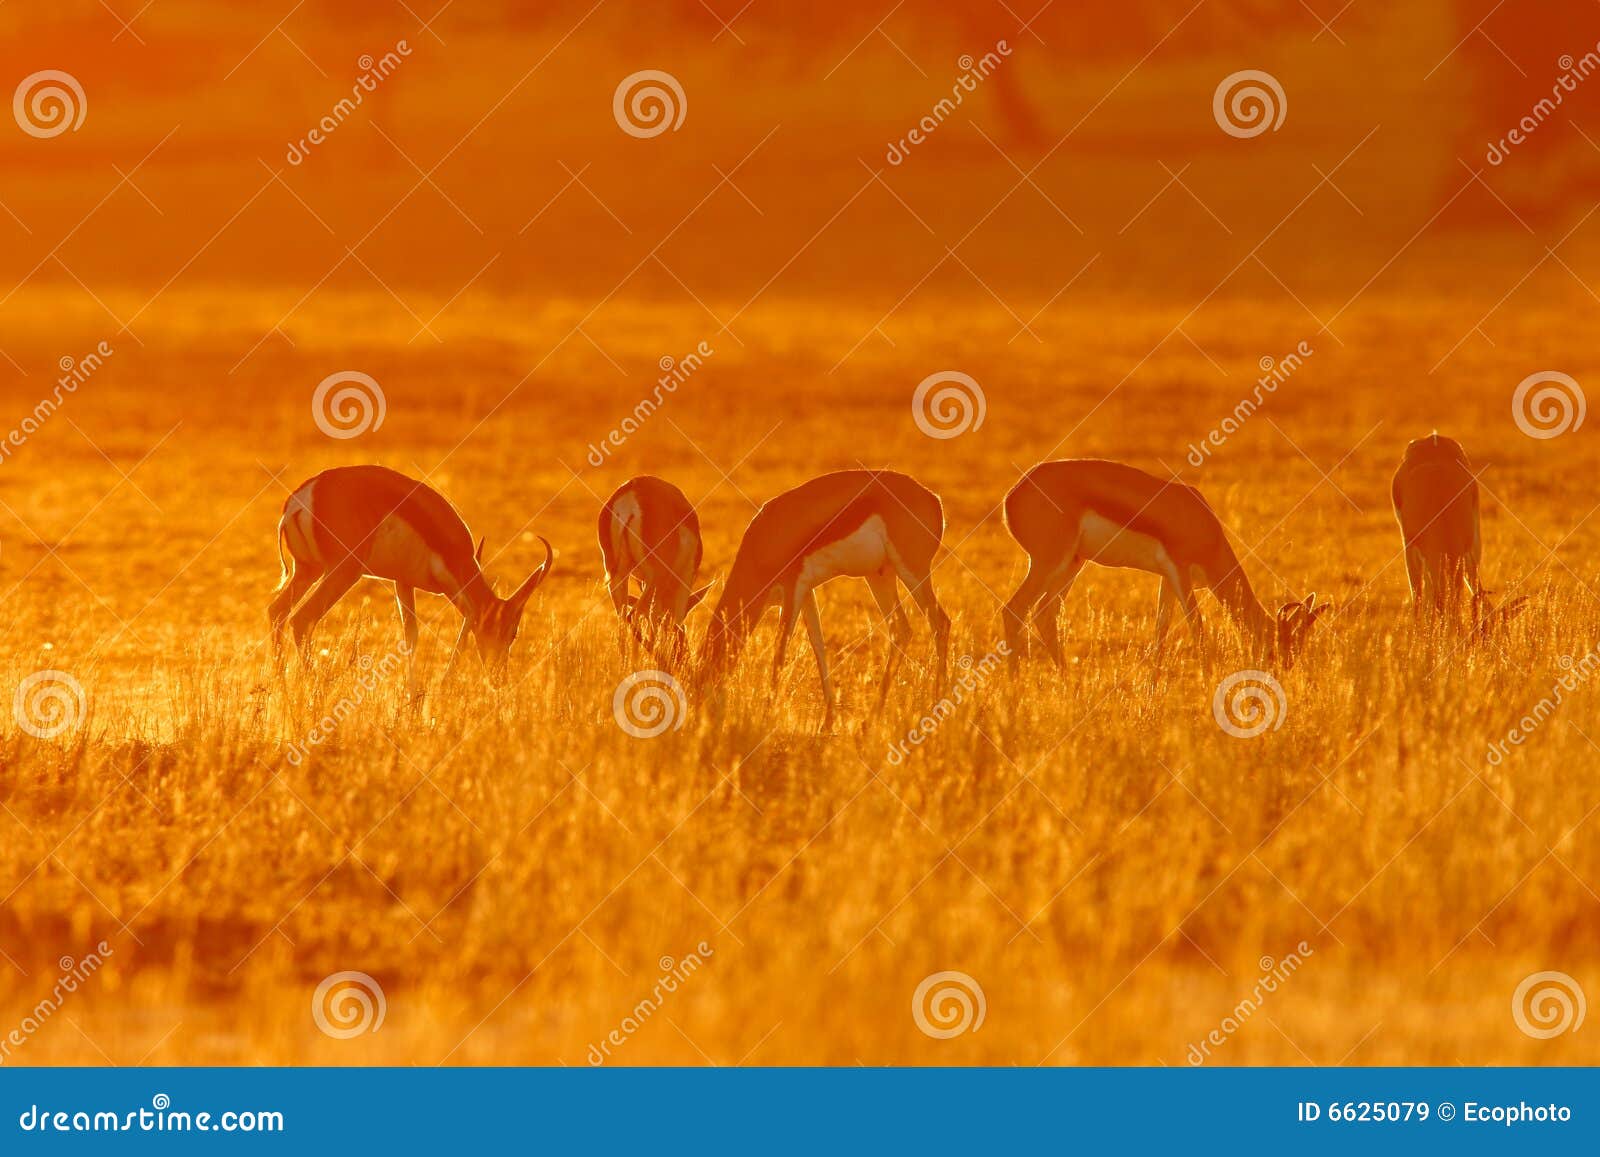 springbok at sunrise